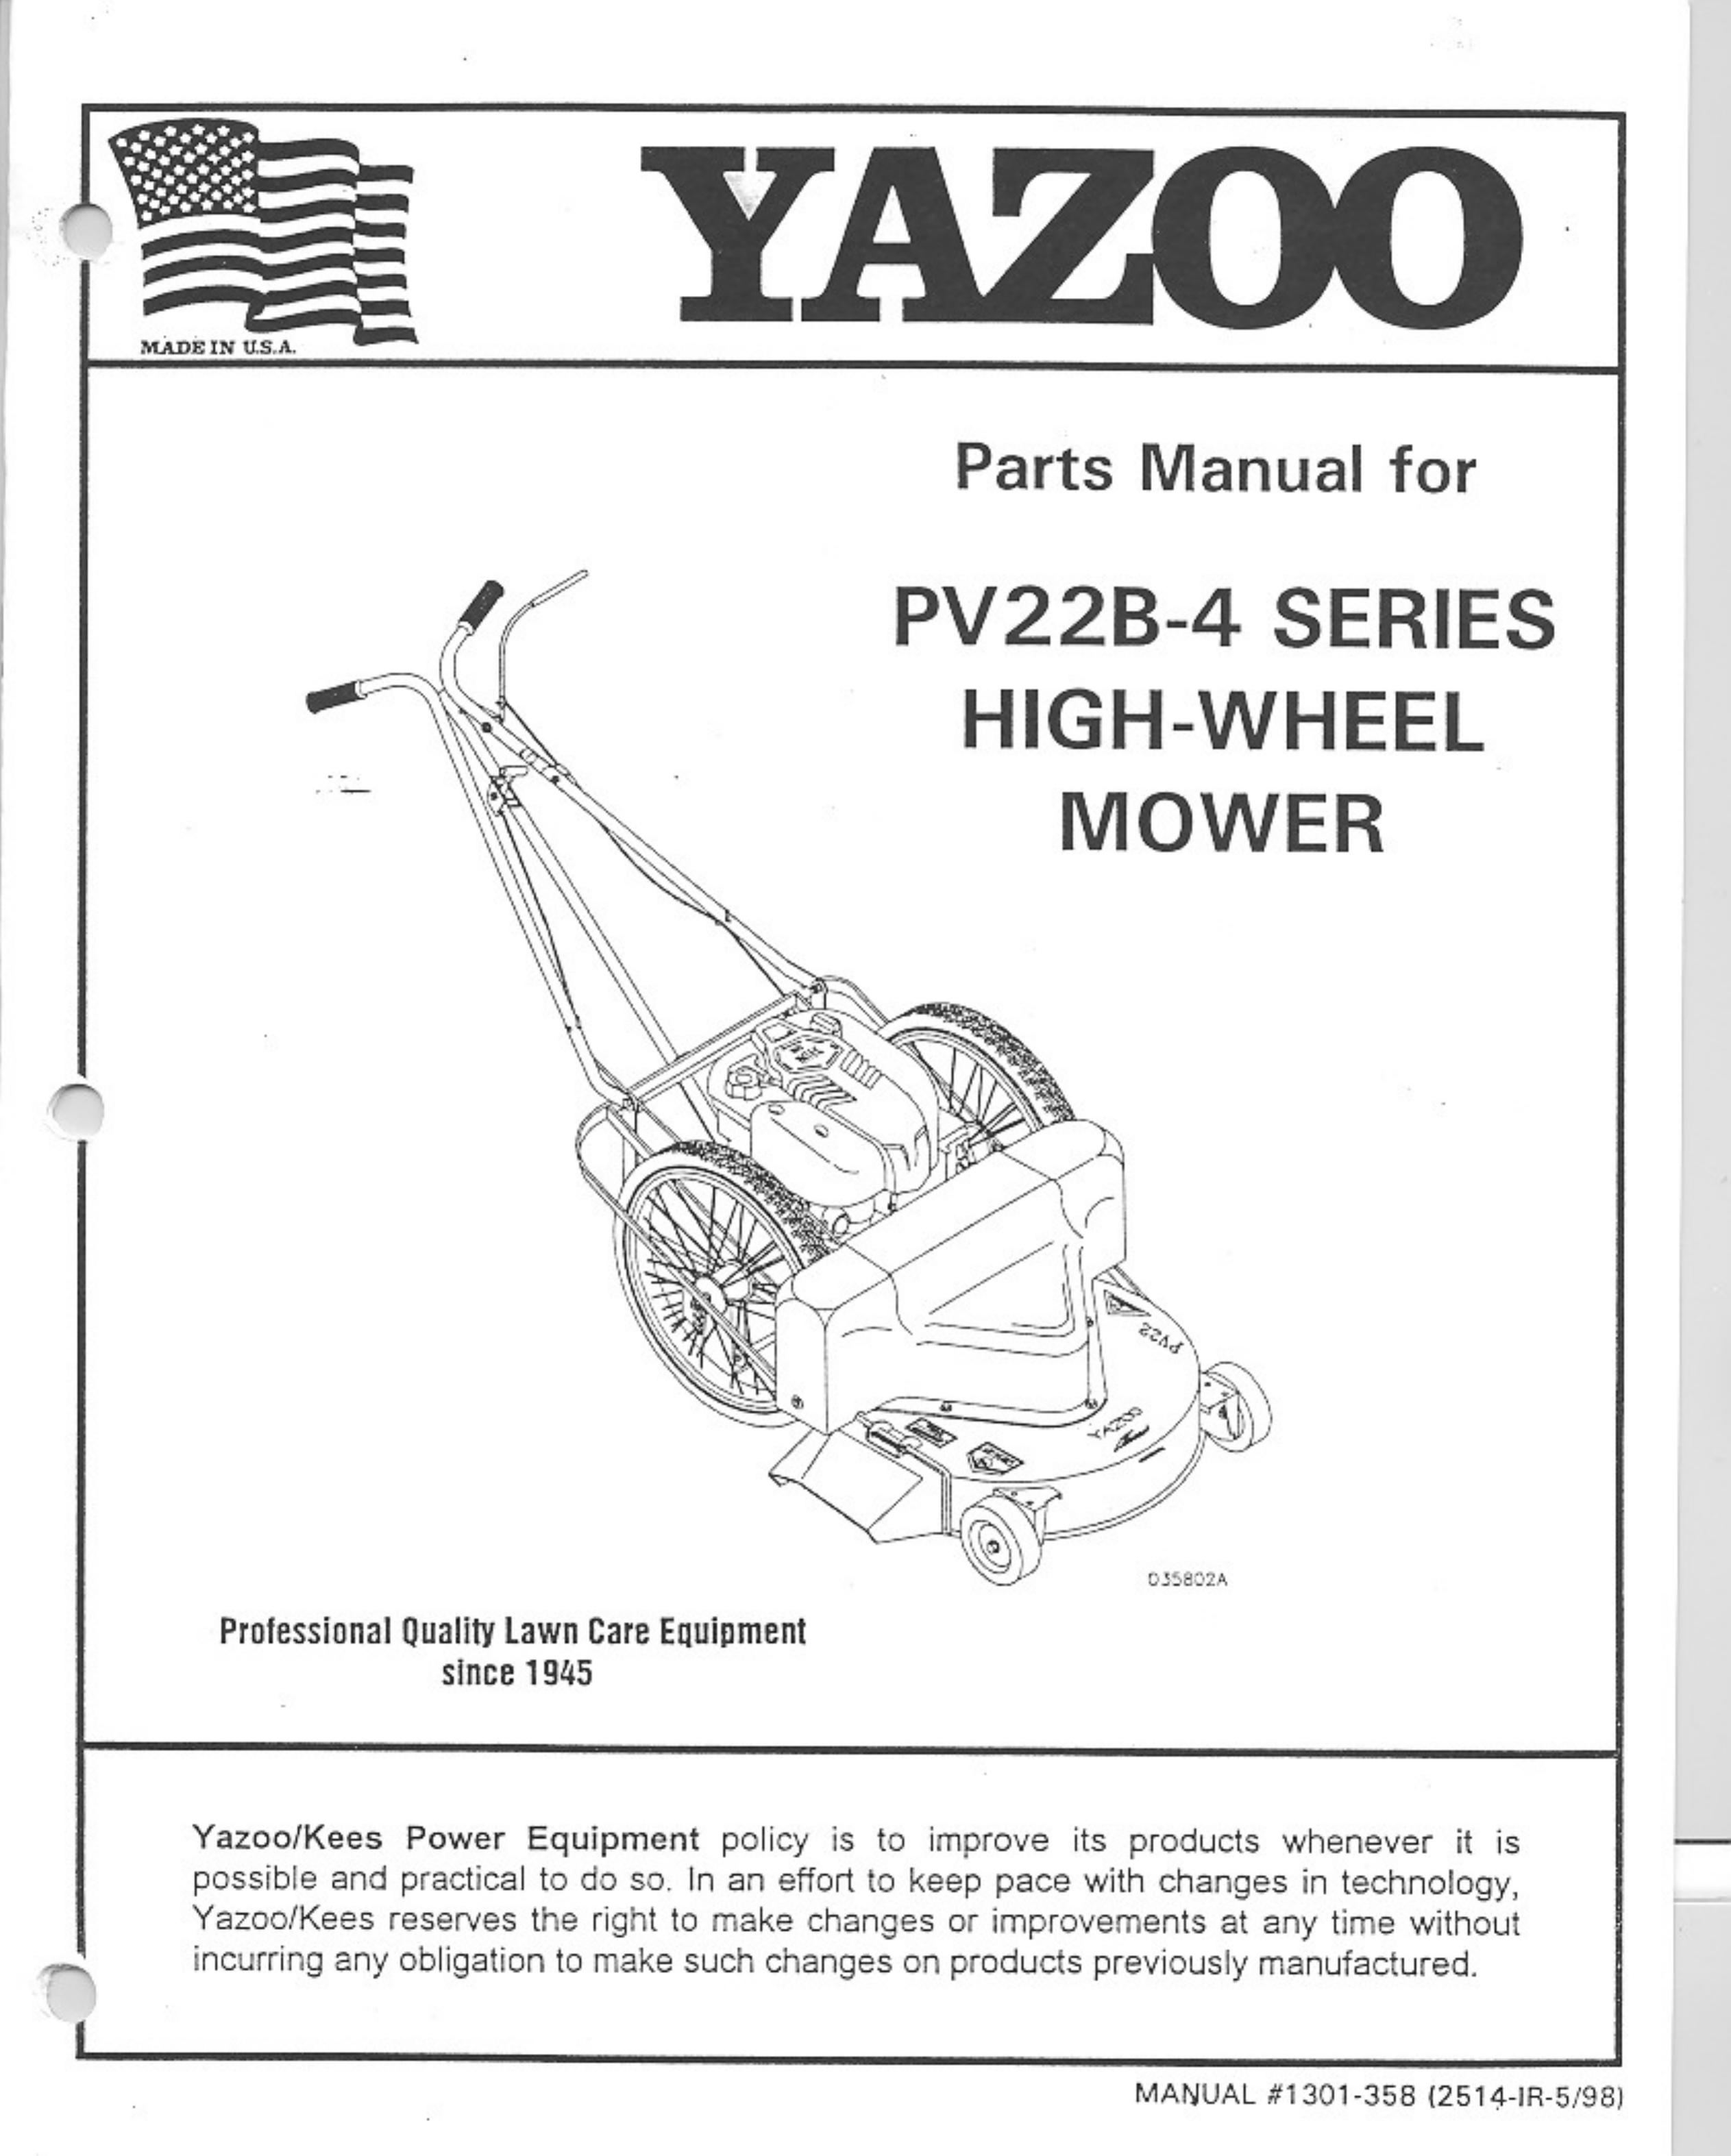 Yazoo/Kees PV22B-4 Series Lawn Mower User Manual